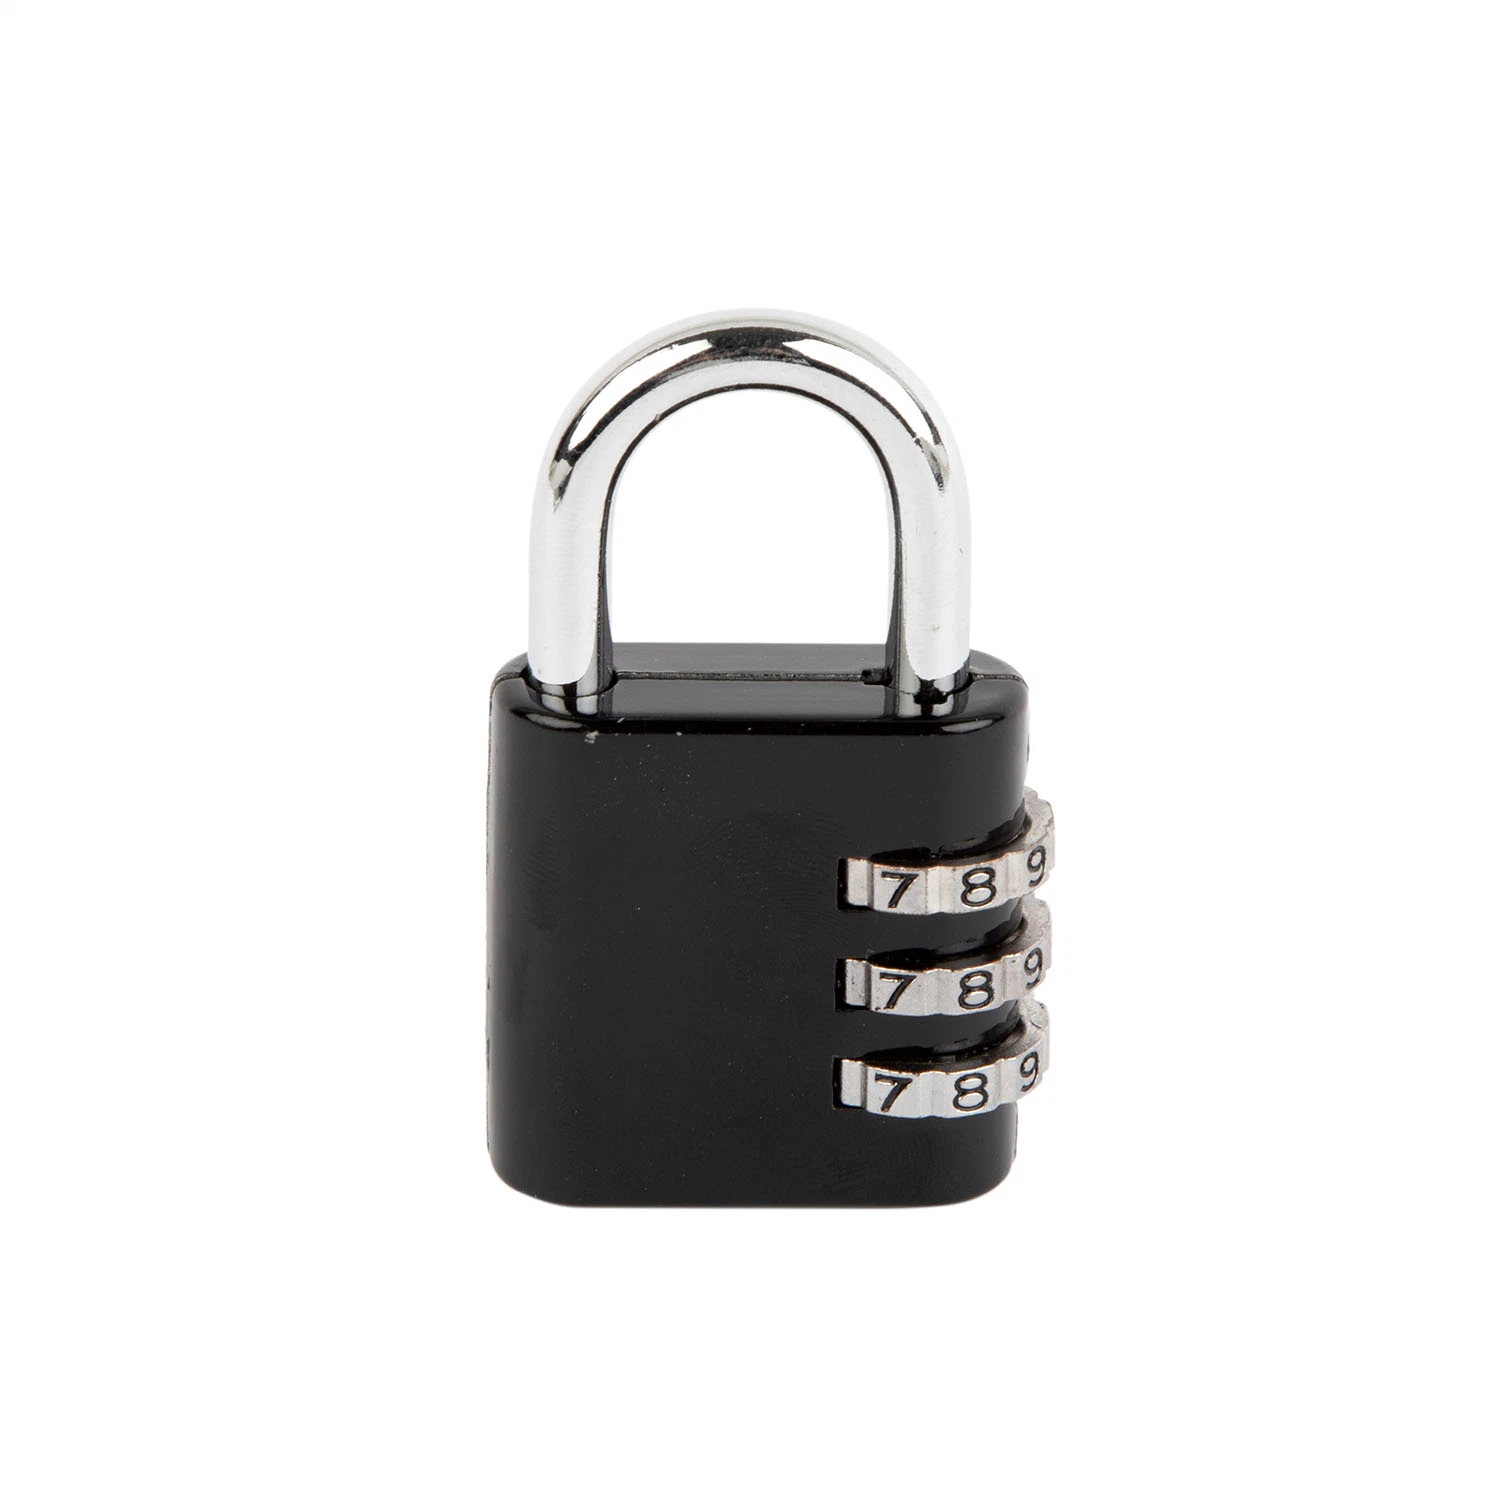 Showcase 3 Digit Code Password Luggage Padlock Combination Lock